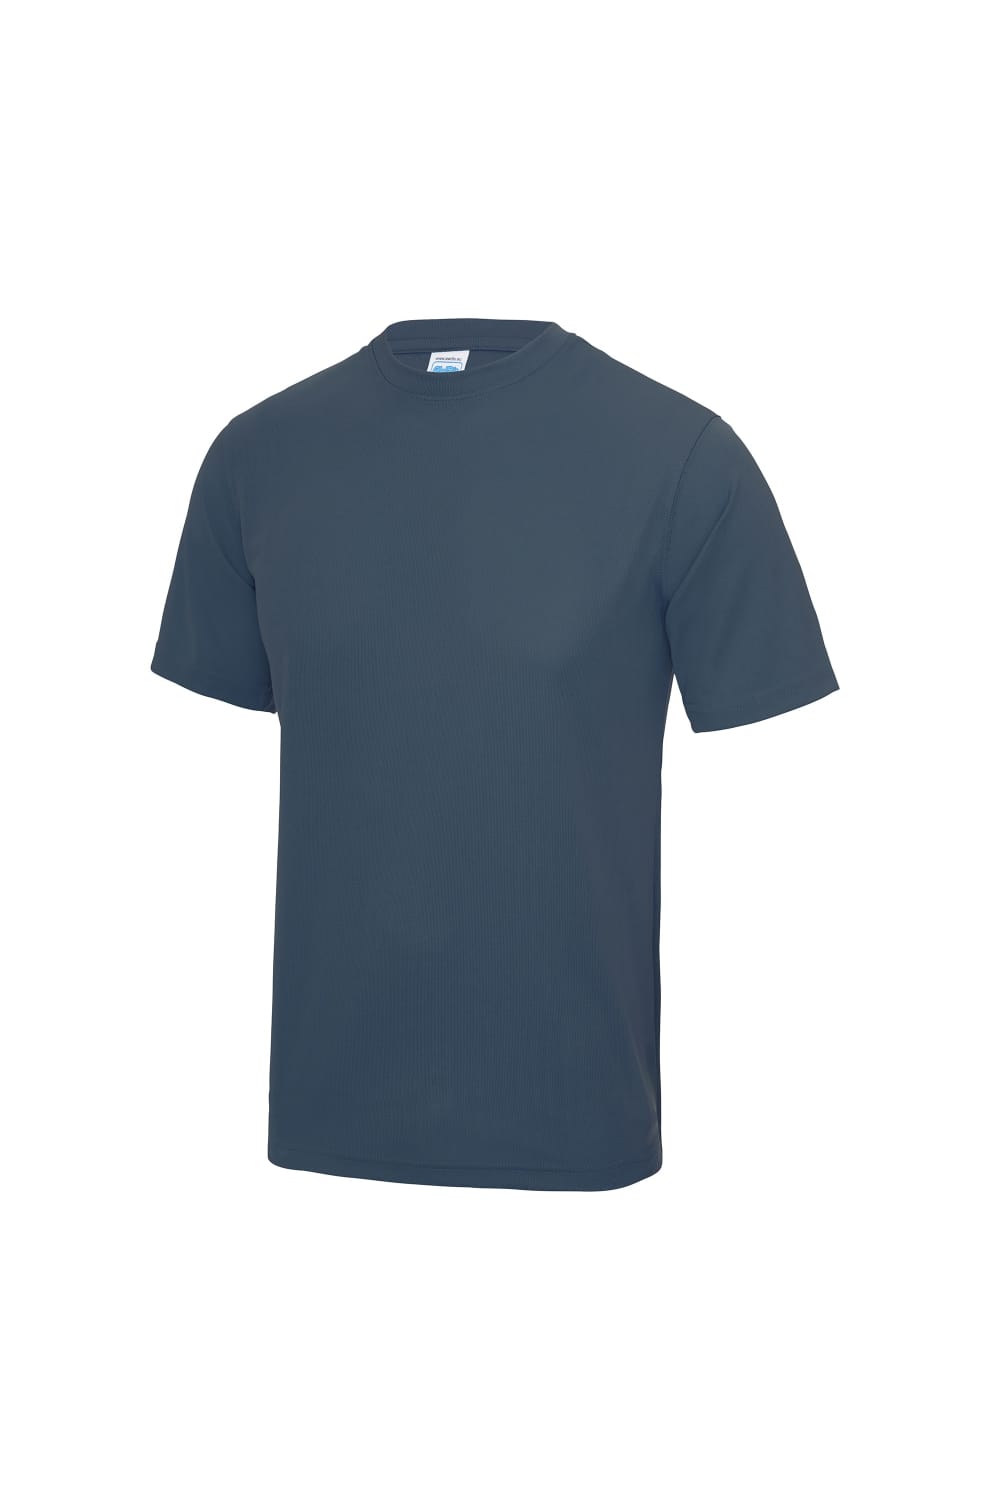 Mens Performance Plain T-Shirt - Airforce Blue